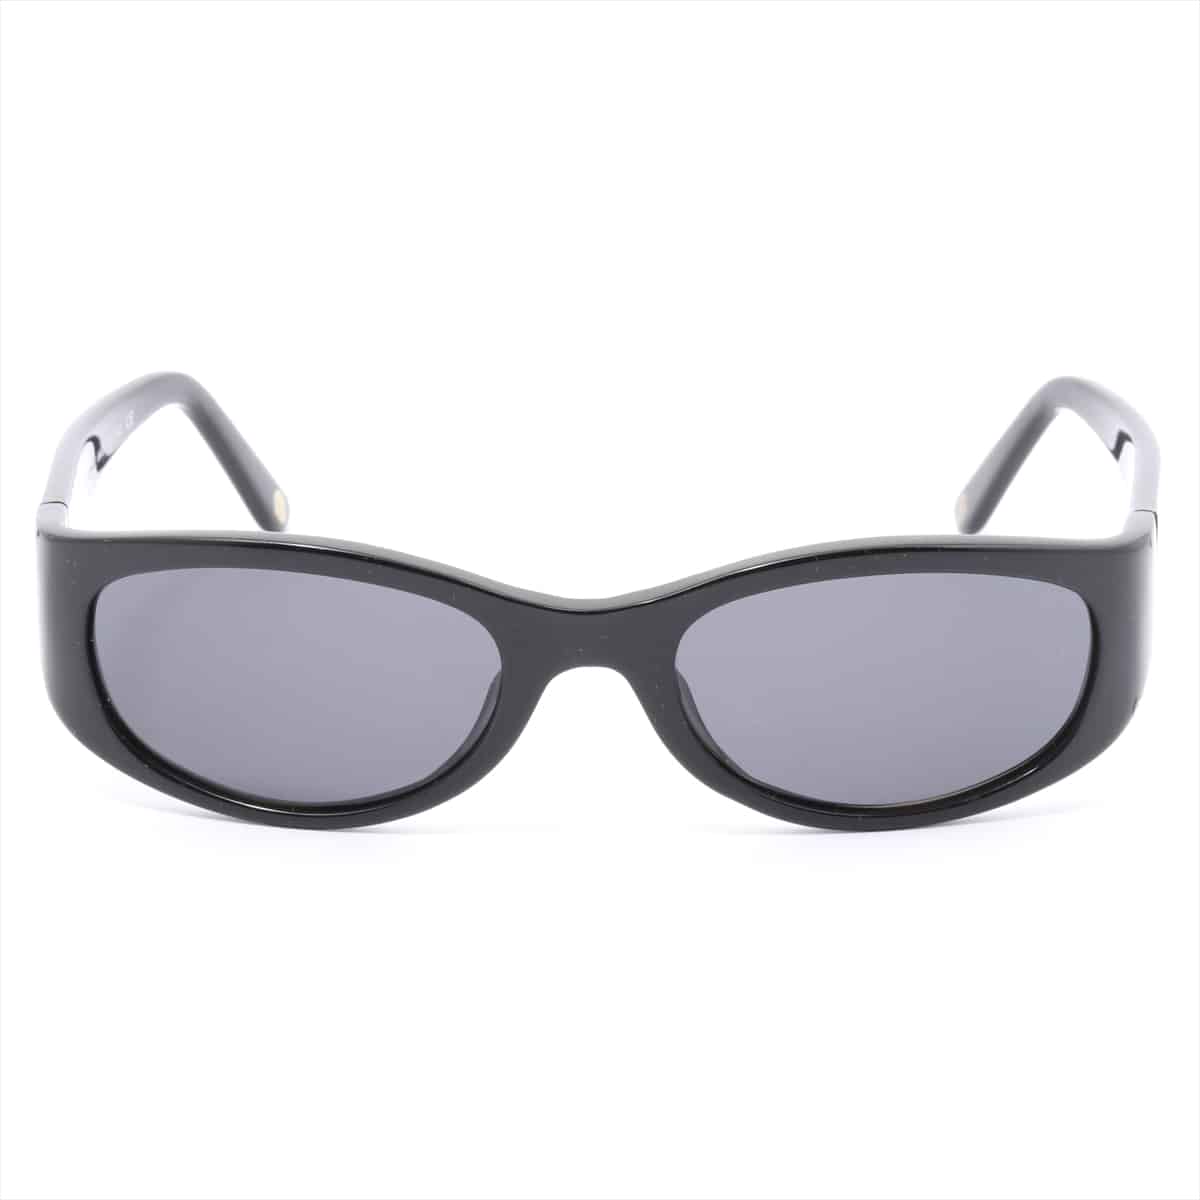 Chanel 5004 Sunglasses Plastic Black